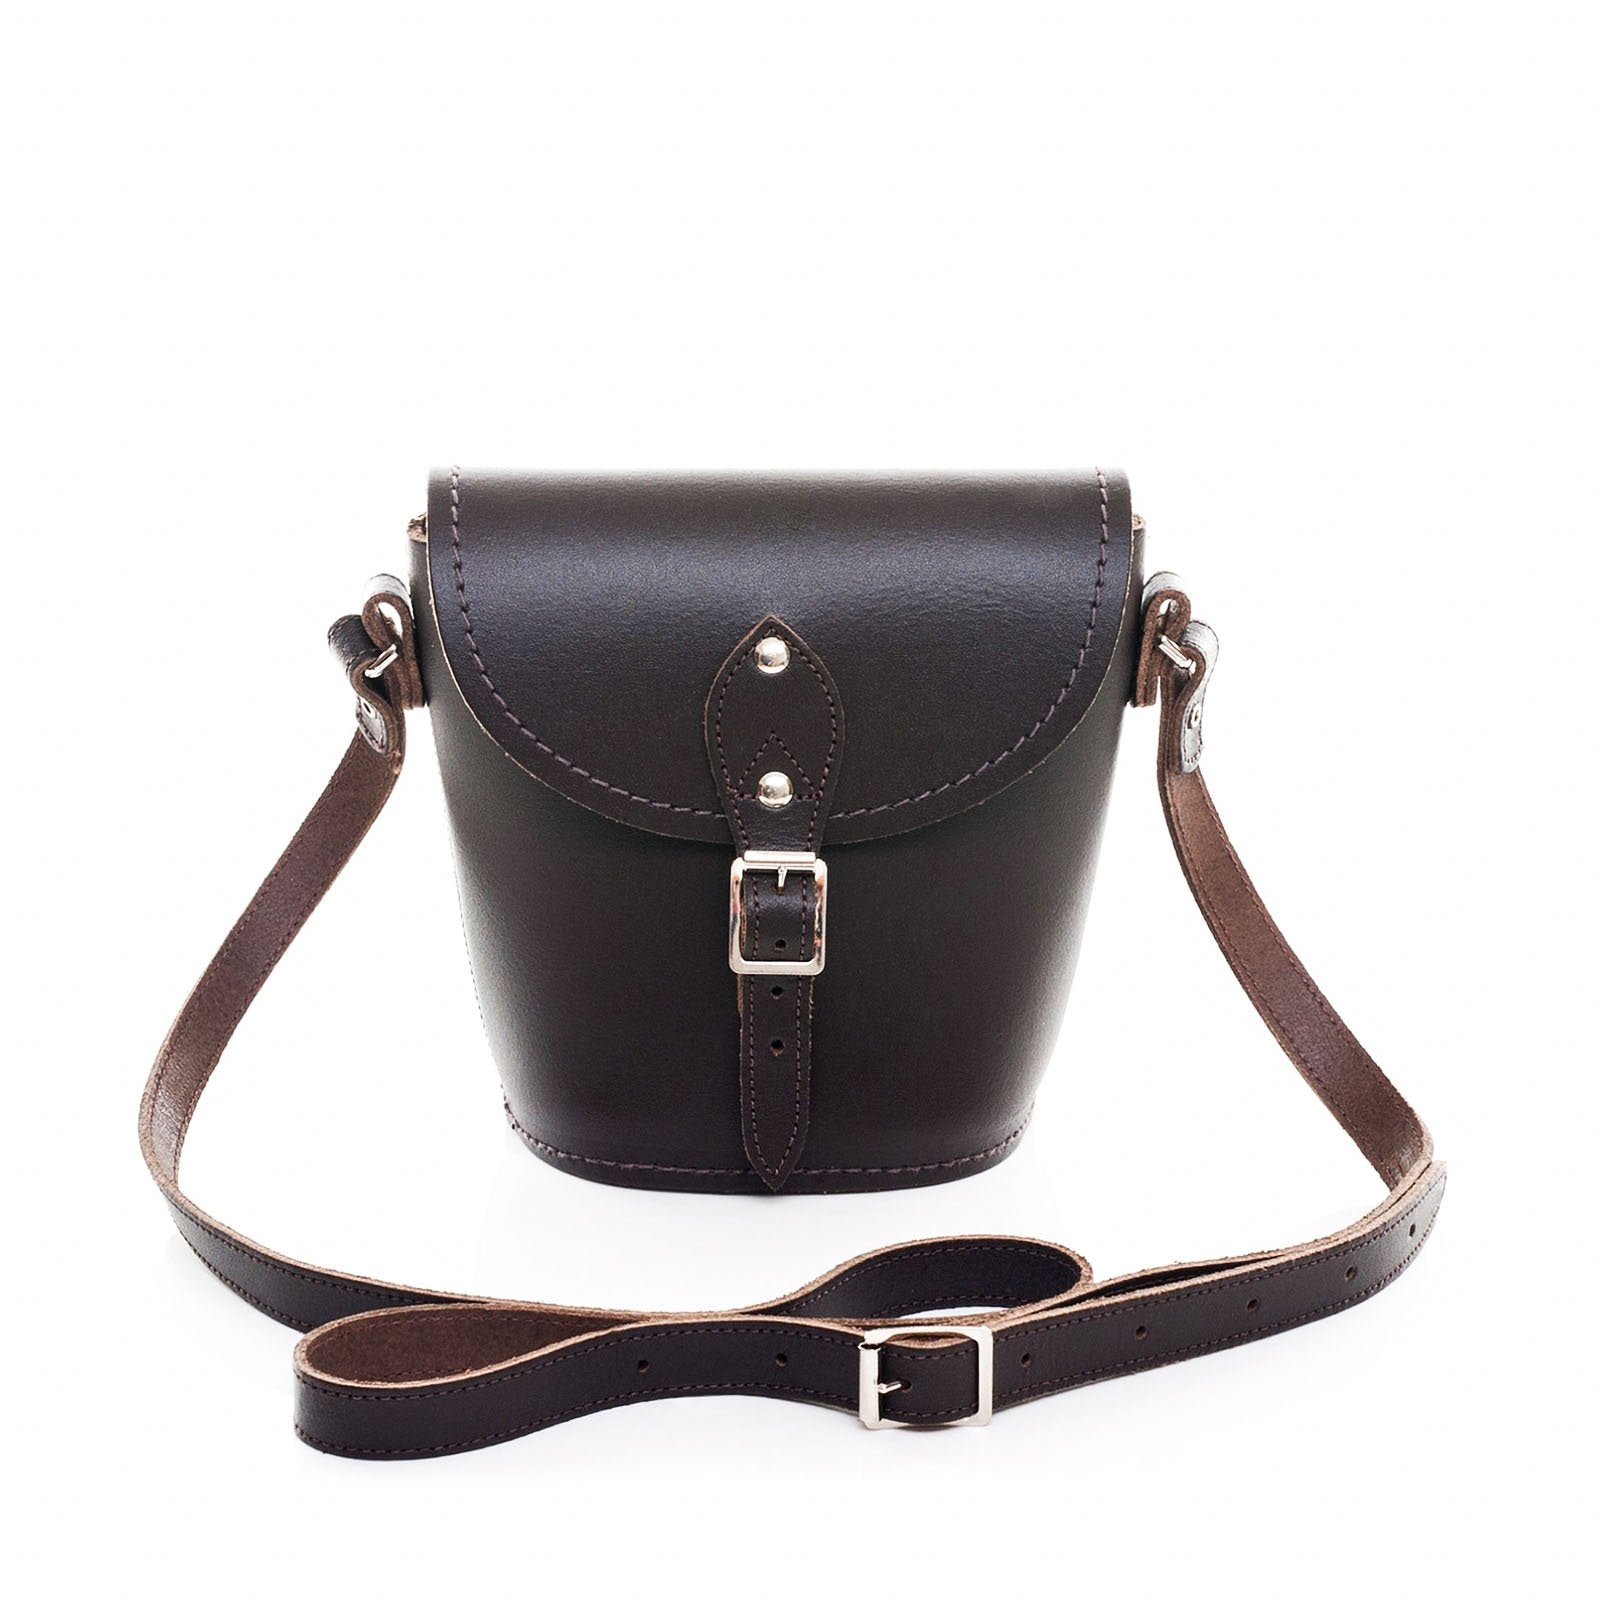 Handmade Leather Barrel Bag - Dark Brown - Small